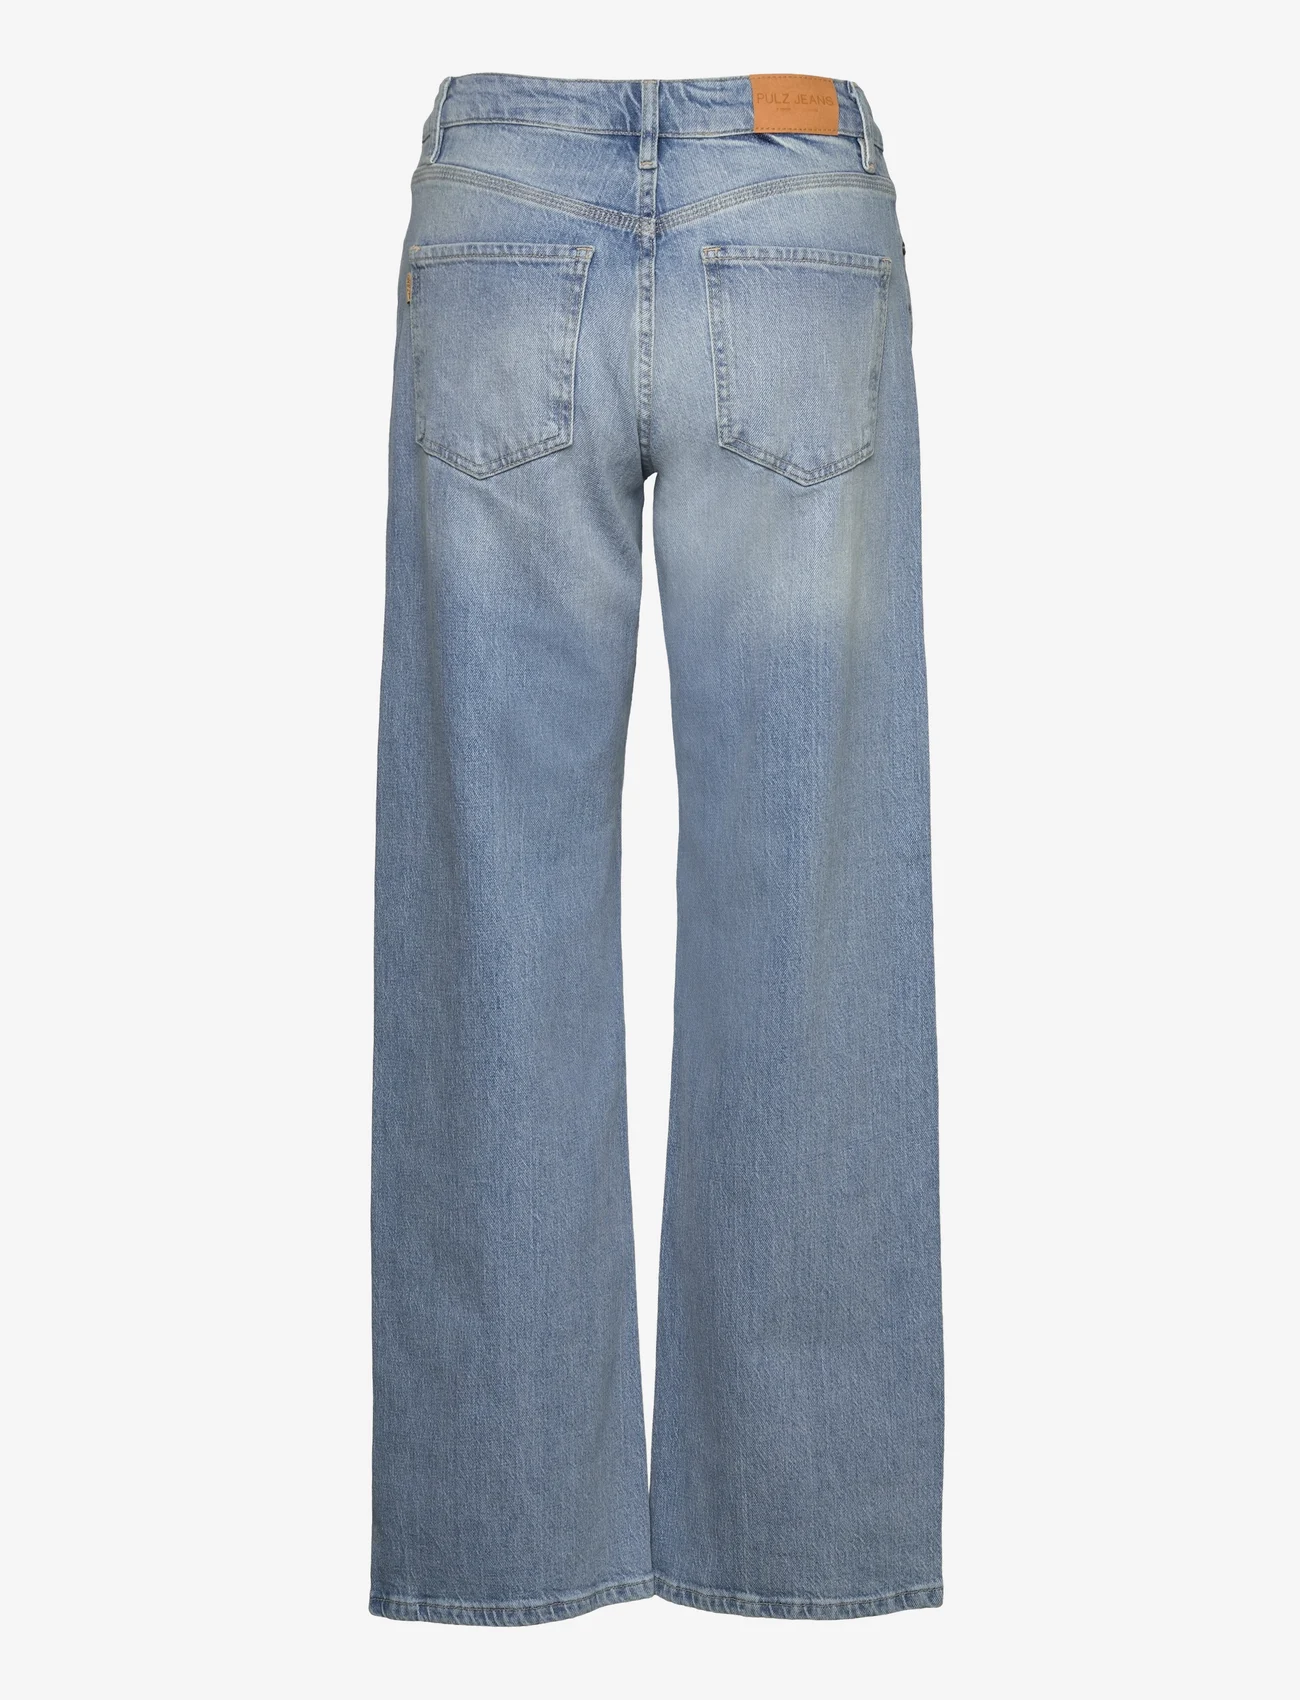 Pulz Jeans - PZVEGA HW Jeans Wide Leg - wide leg jeans - light blue denim - 1